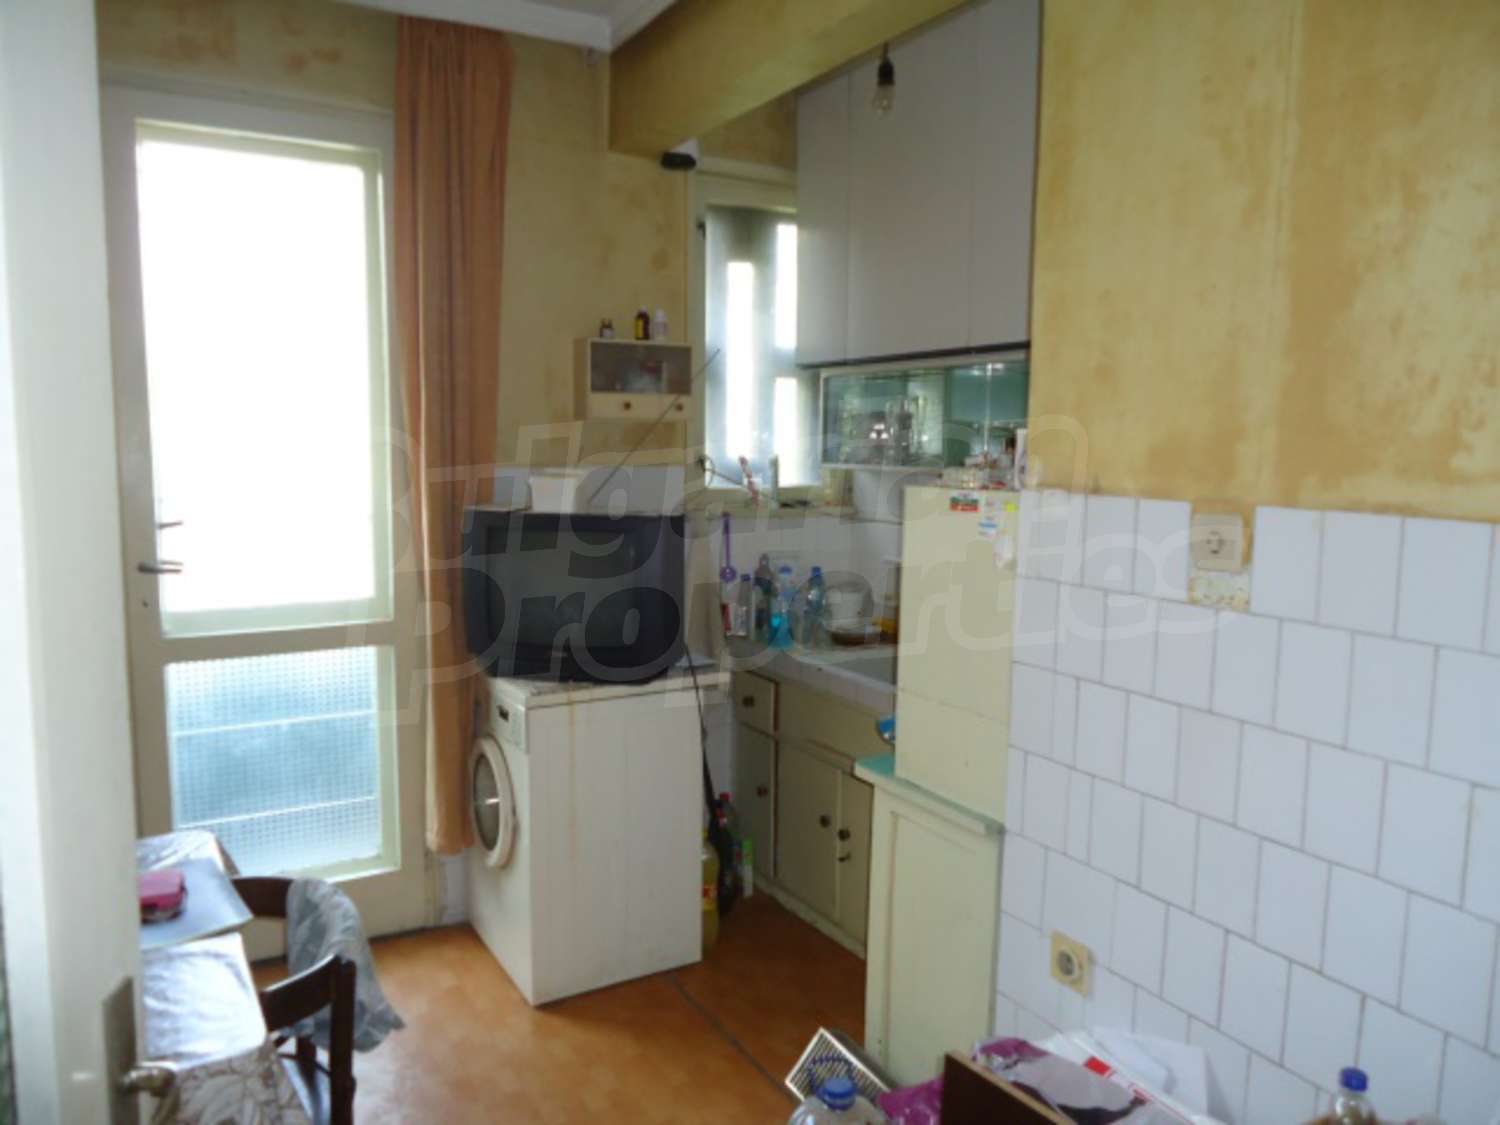 2-bedroom apartment for sale in Stara Zagora, Bulgaria. Big apartment ...